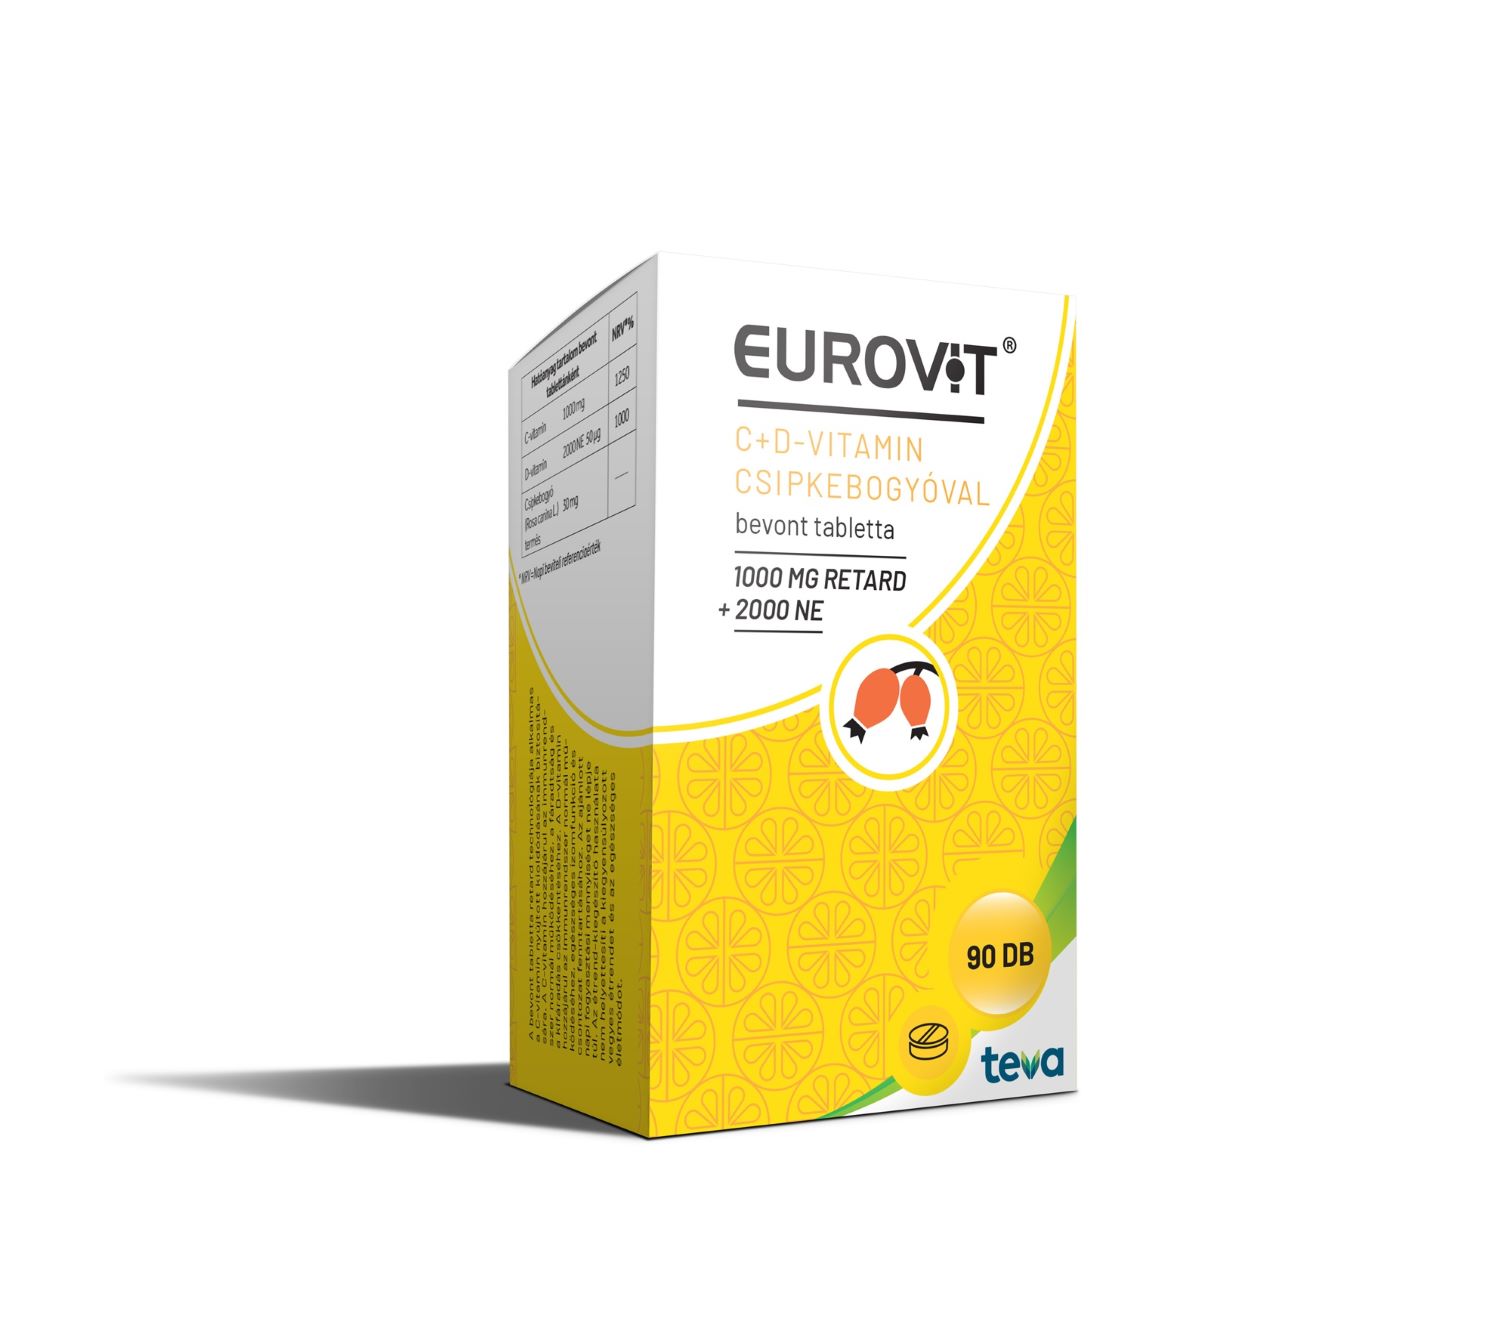 Eurovit C-vitamin 1000mg retard + D-vitamin 2000 NE csipkebogyóval tabletta